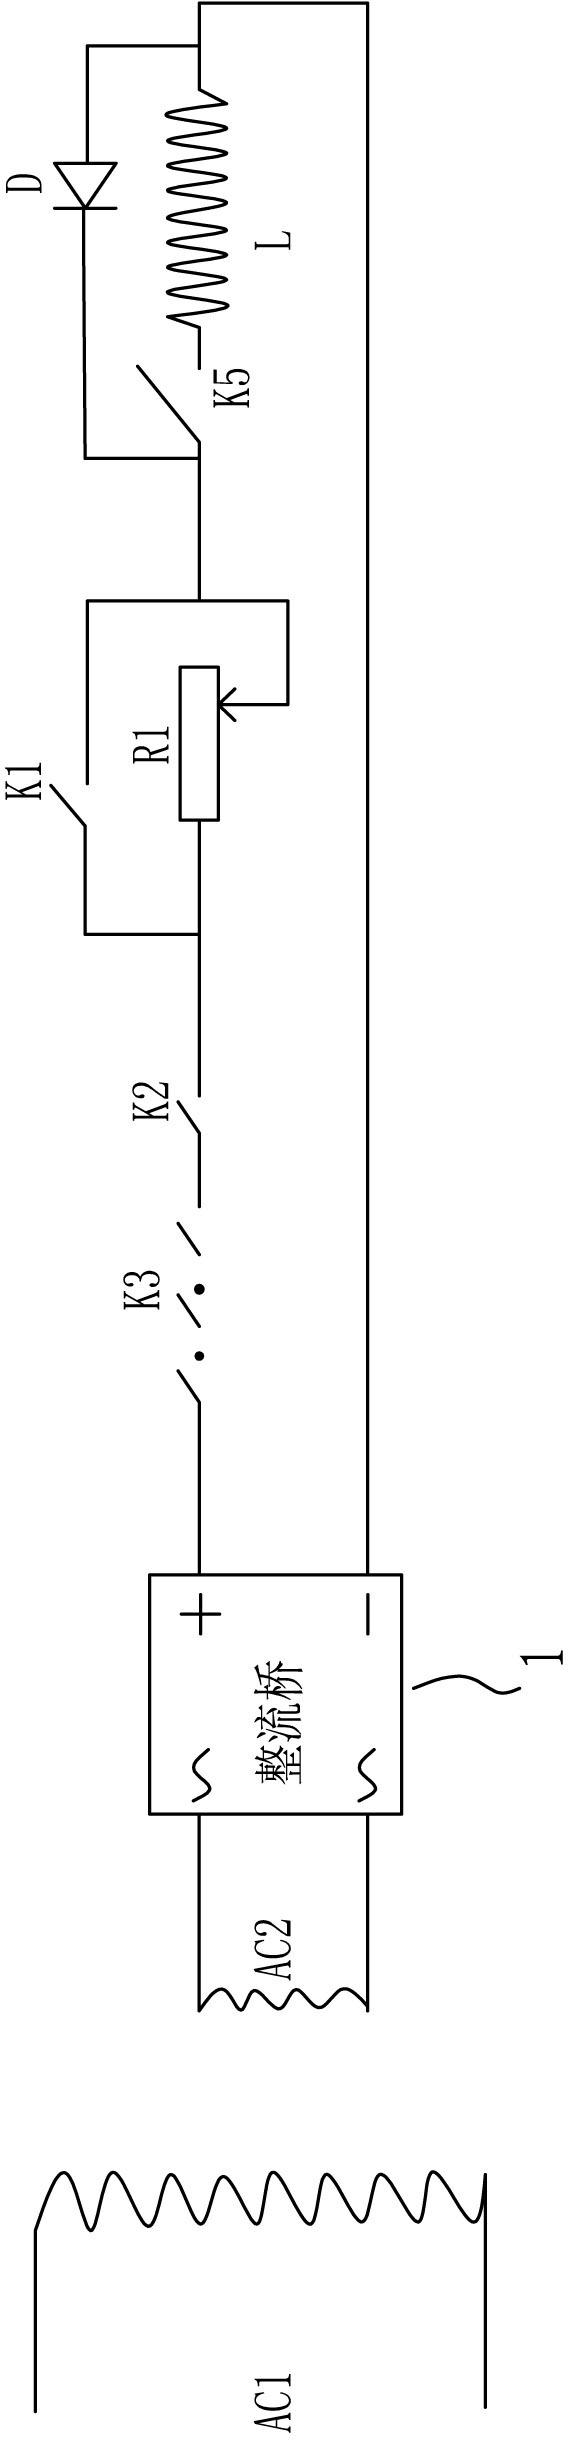 Control circuit of elevator brake